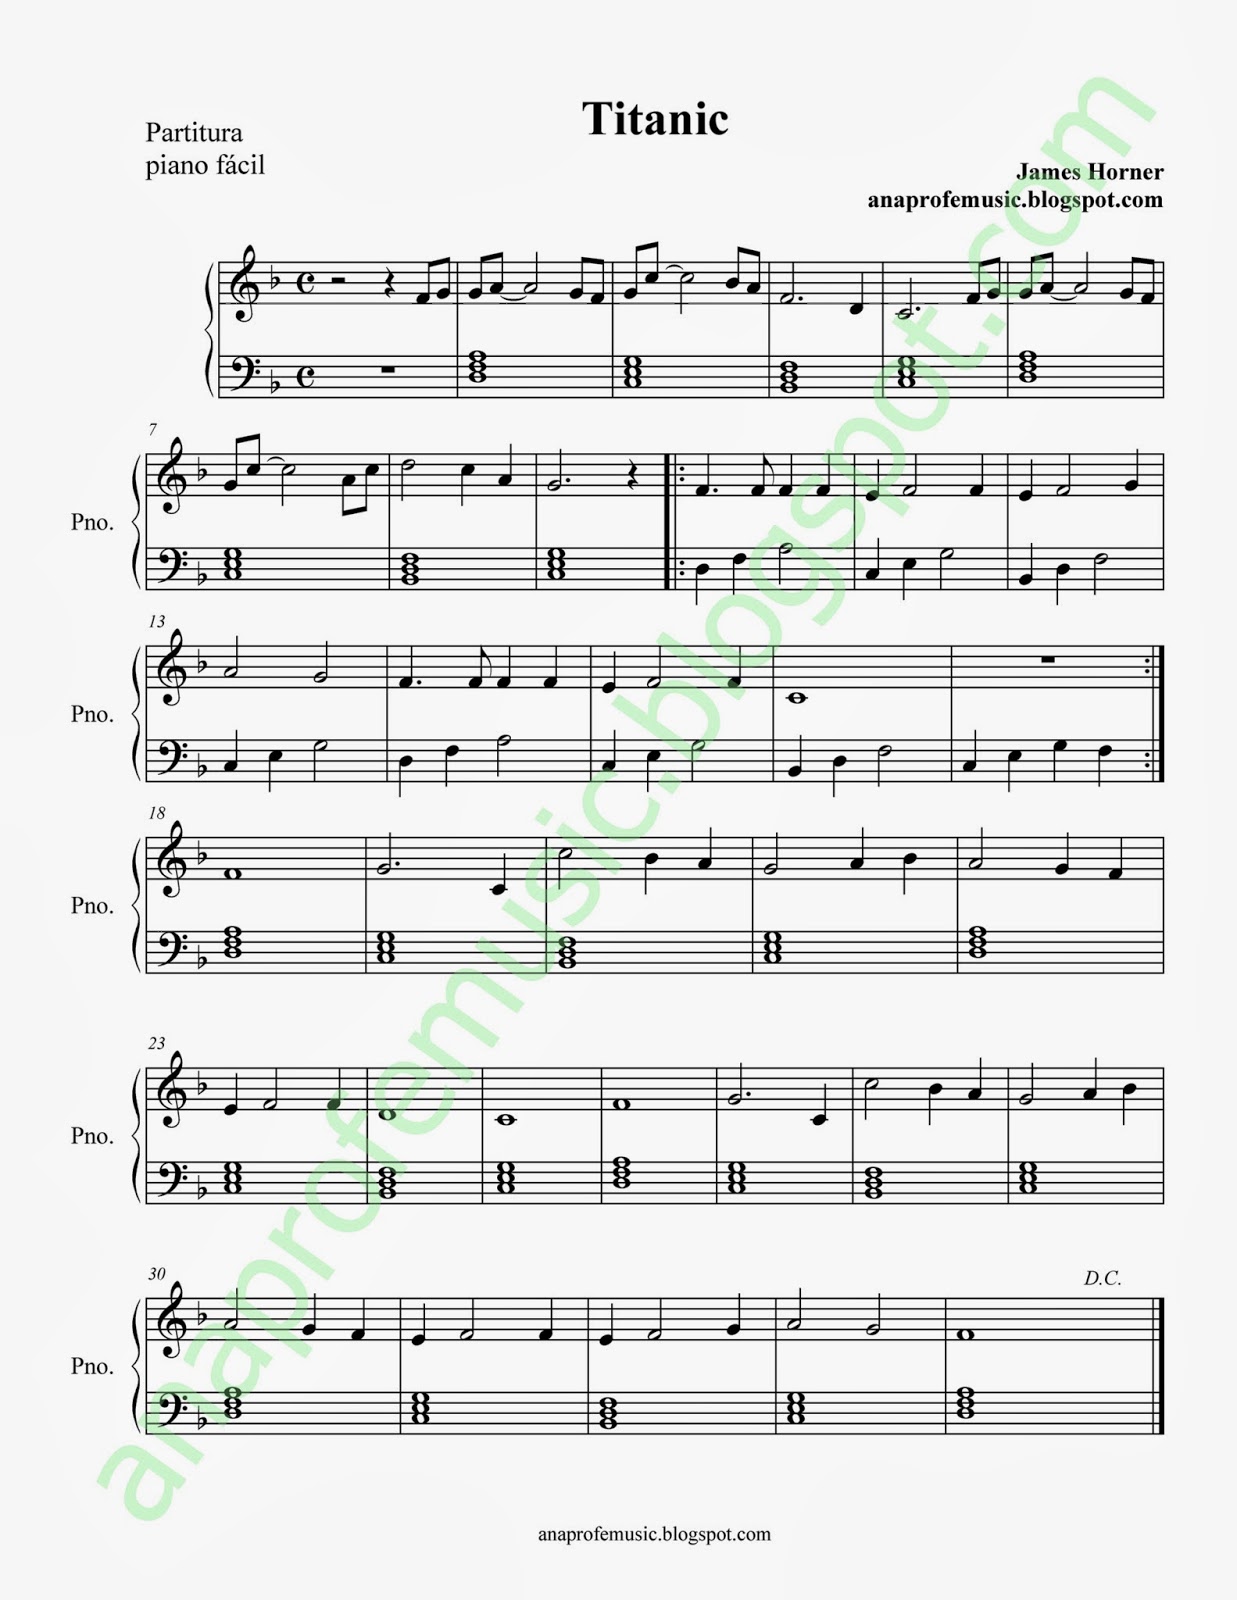 Guardia no amante AnaProfeMusic: Partitura BSO Titanic para piano - fácil -